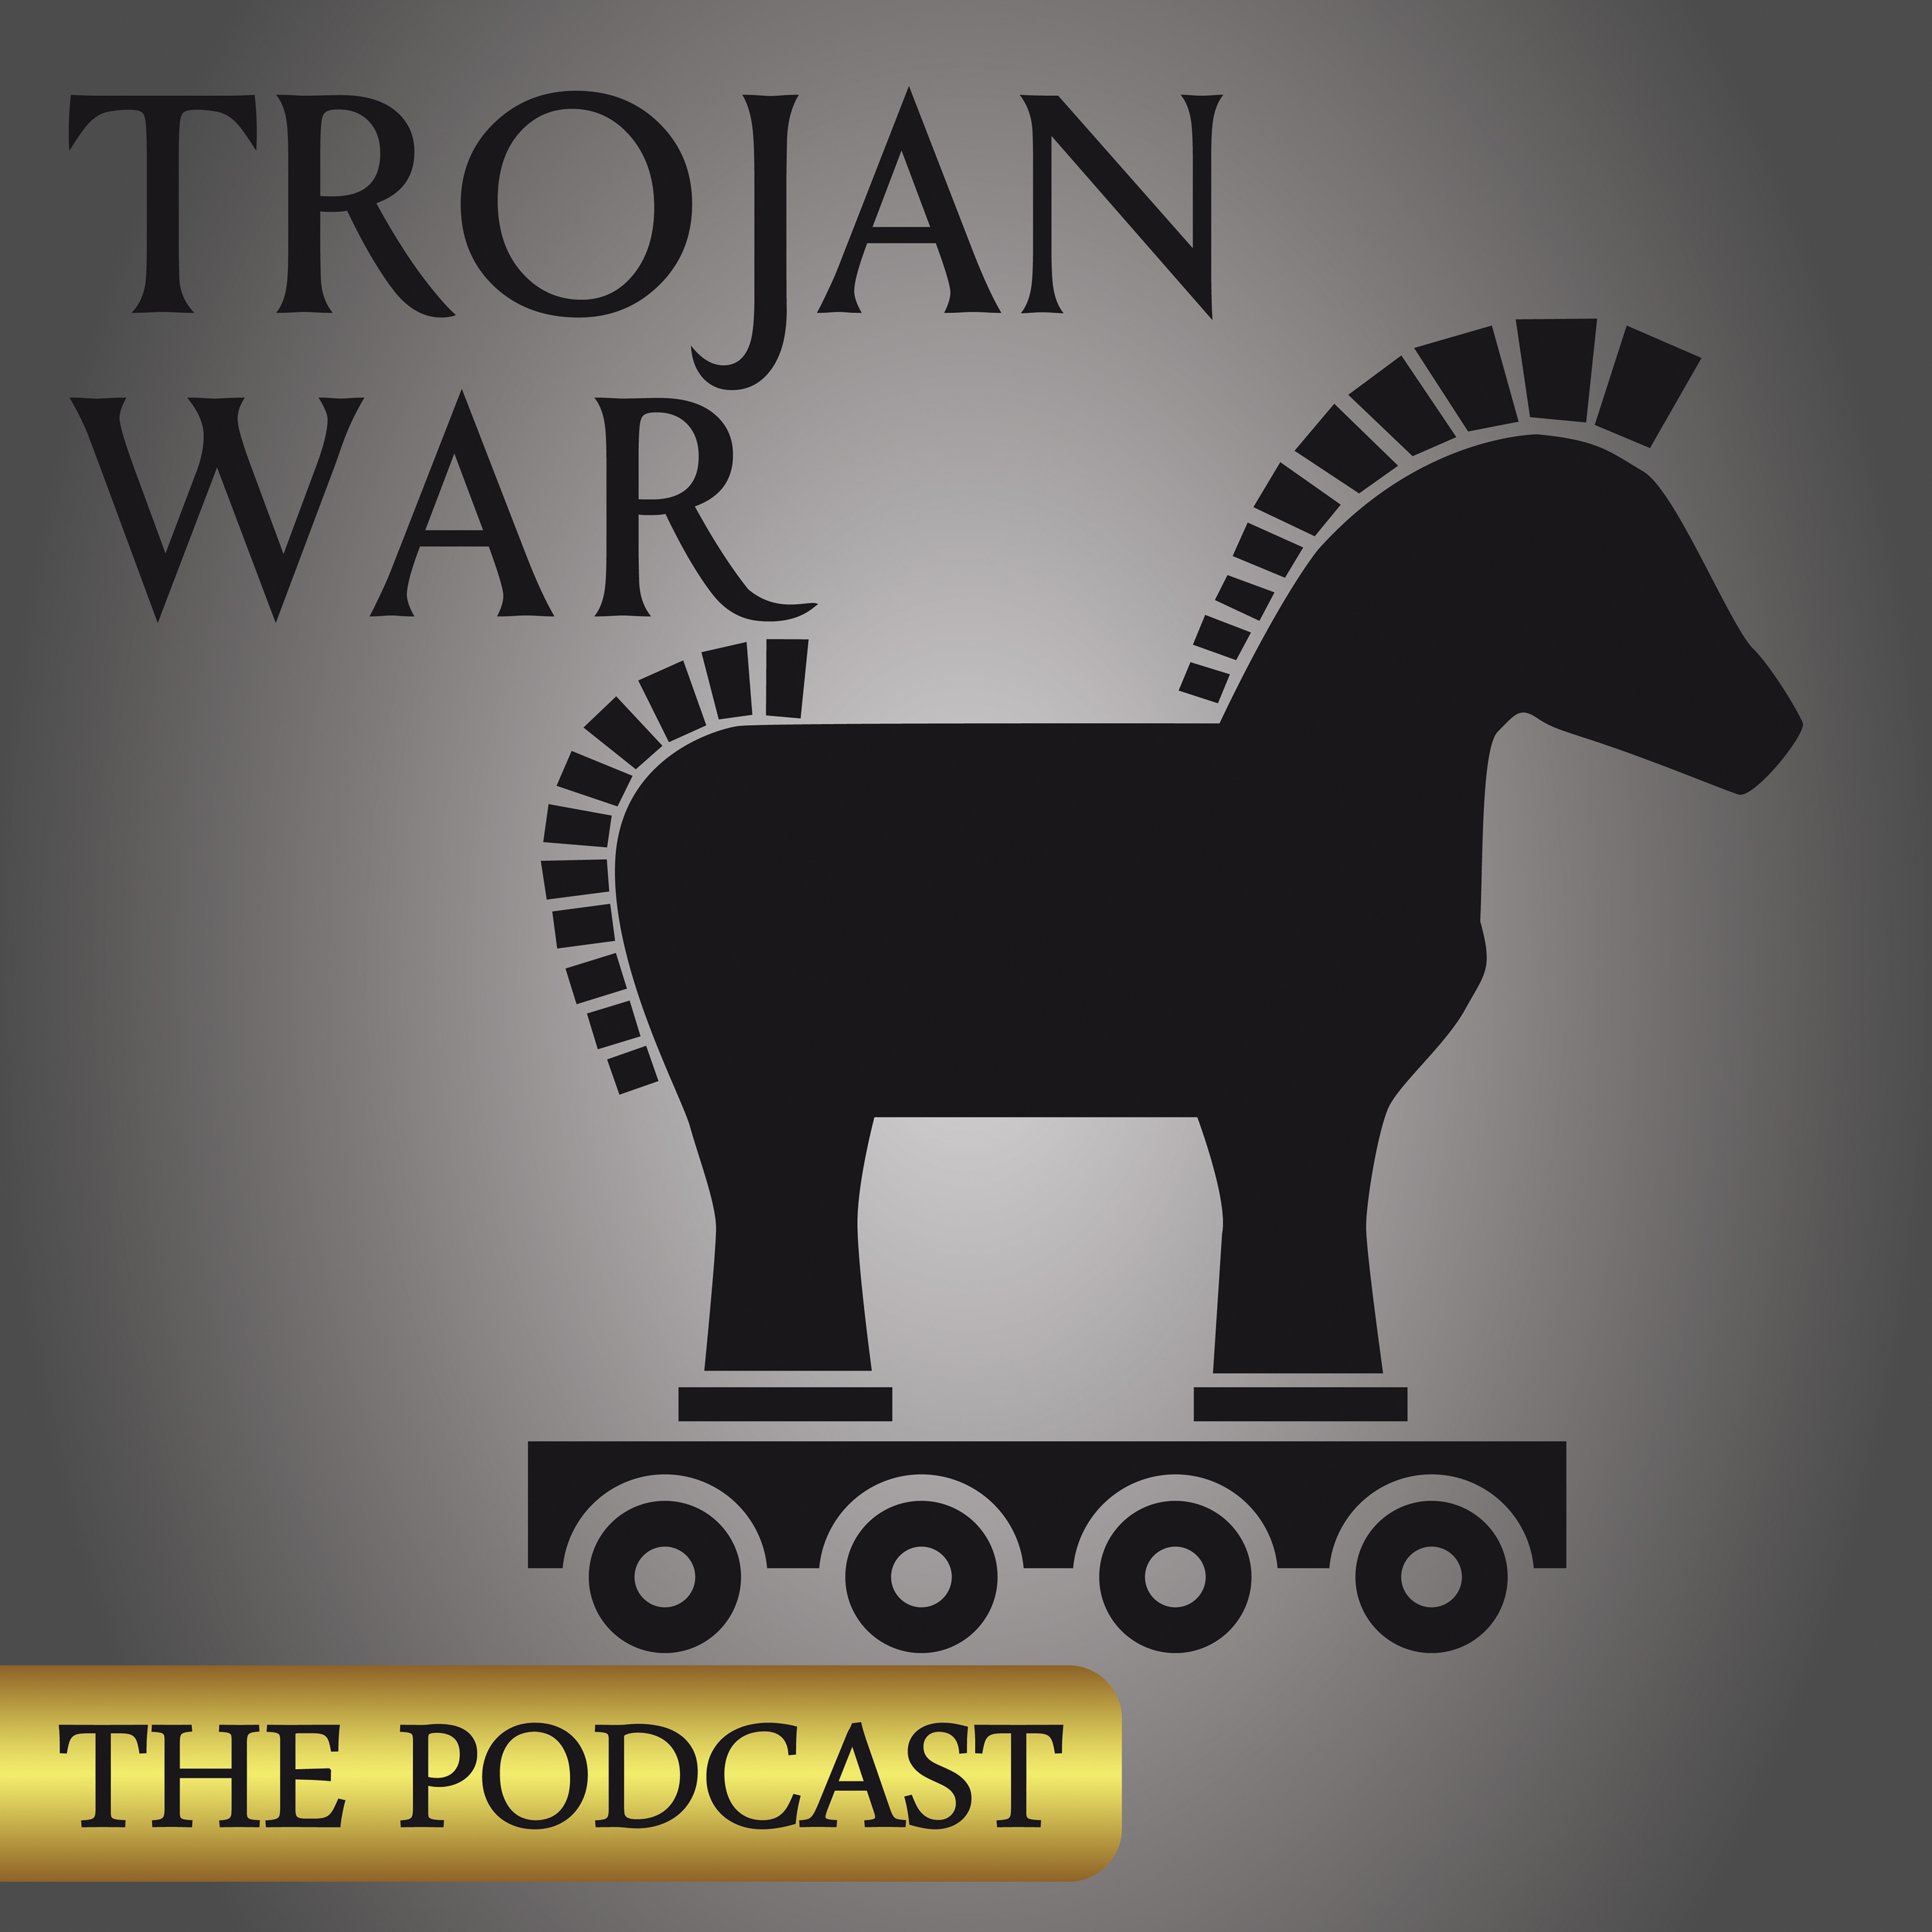 Episode 19 "The trojan horse" .